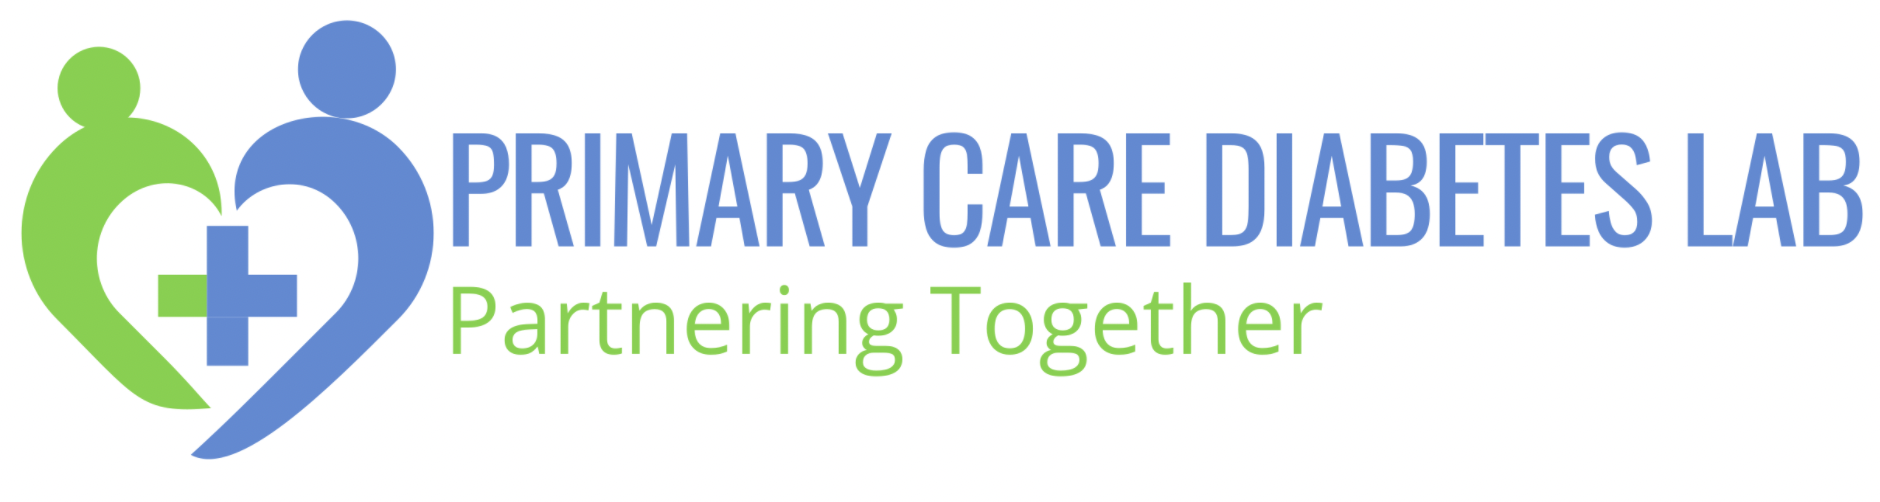 Primary Care Diabetes Logo